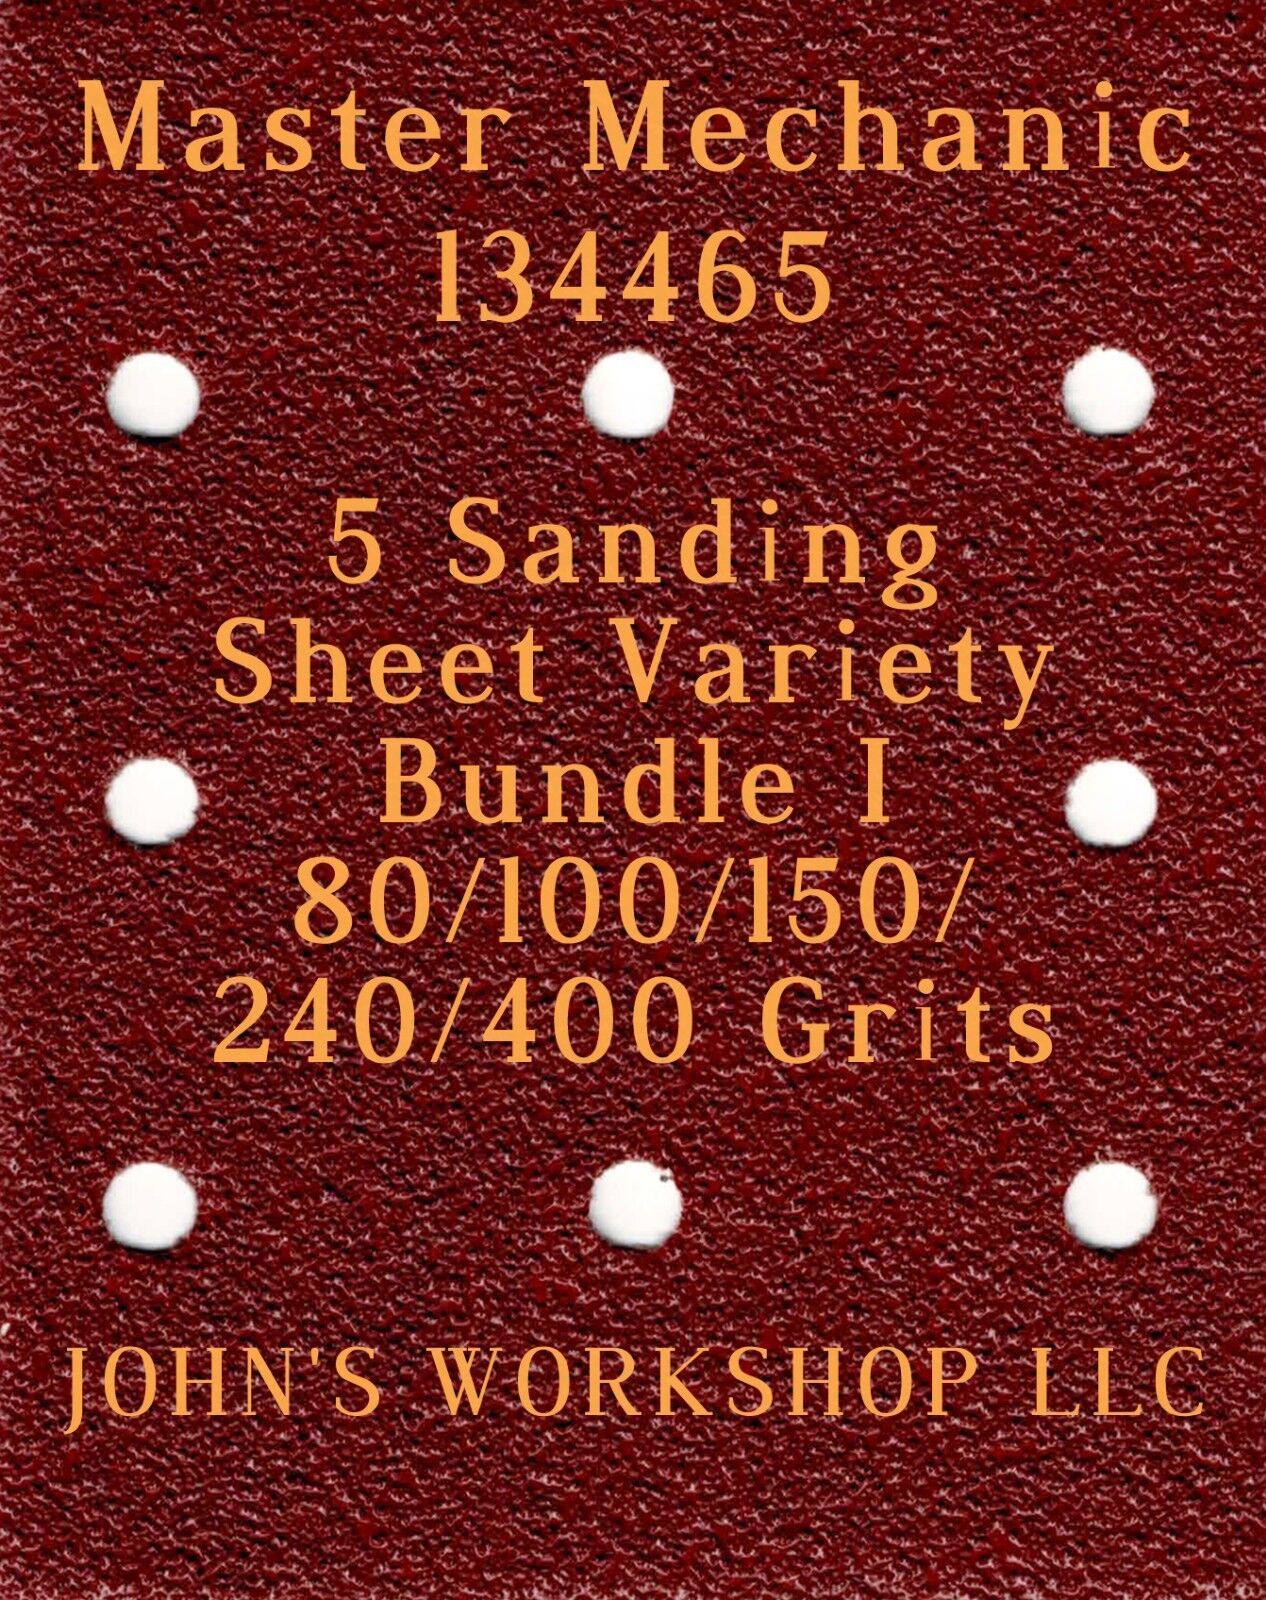 Master Mechanic 134465 - 80/100/150/240/400 Grits - 5 Sandpaper Variety Bundle I - $4.99